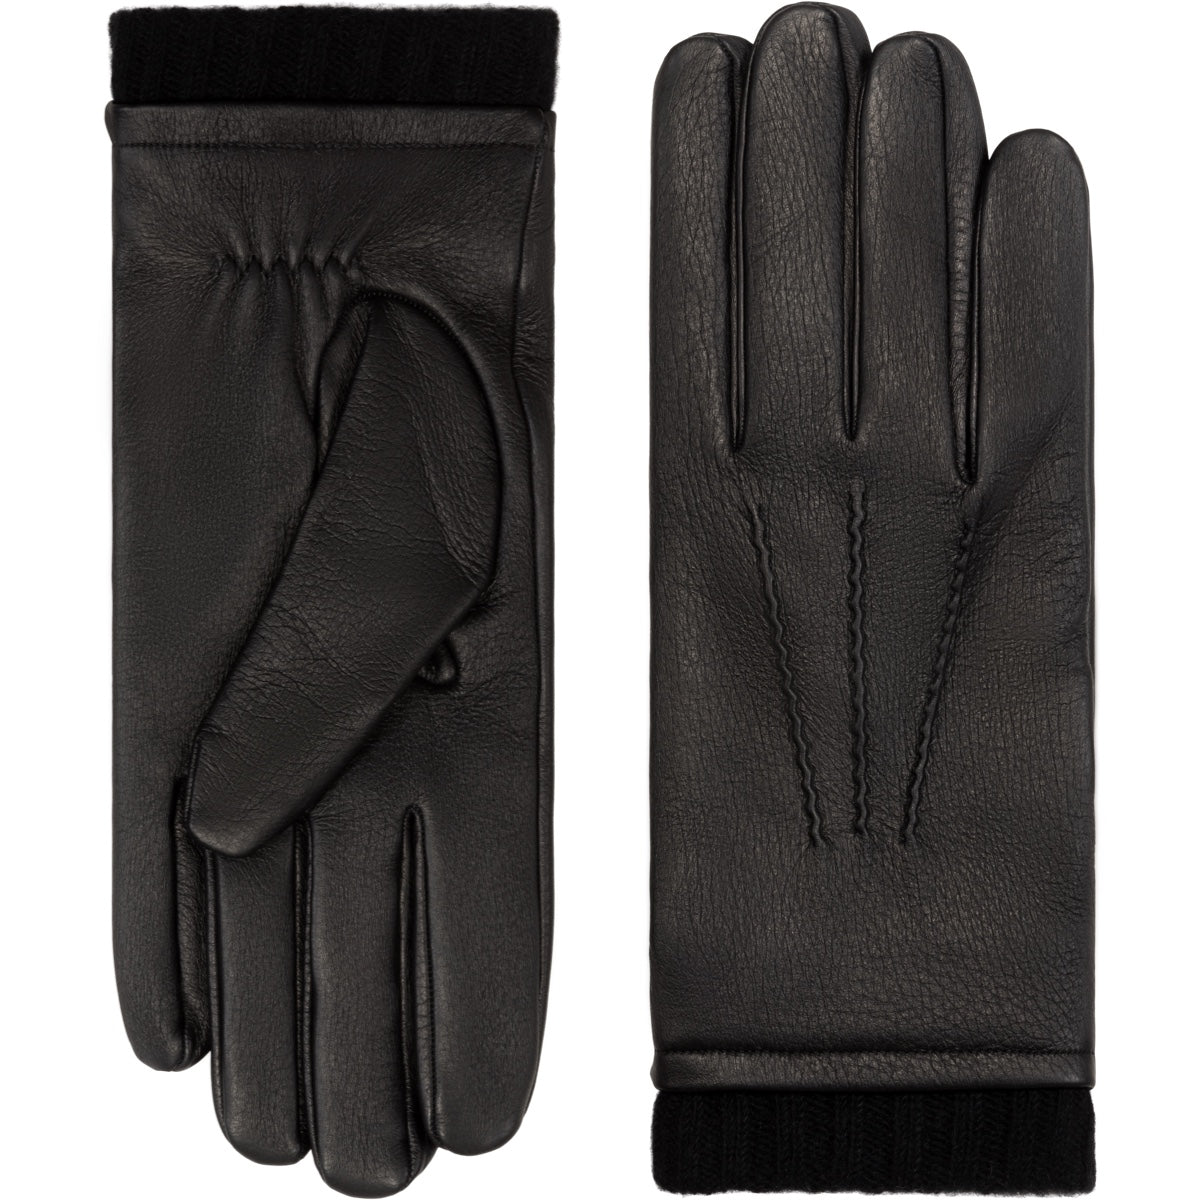 Deerskin Leather Gloves Men Black - Handmade in Italy XXXL - 12½/13